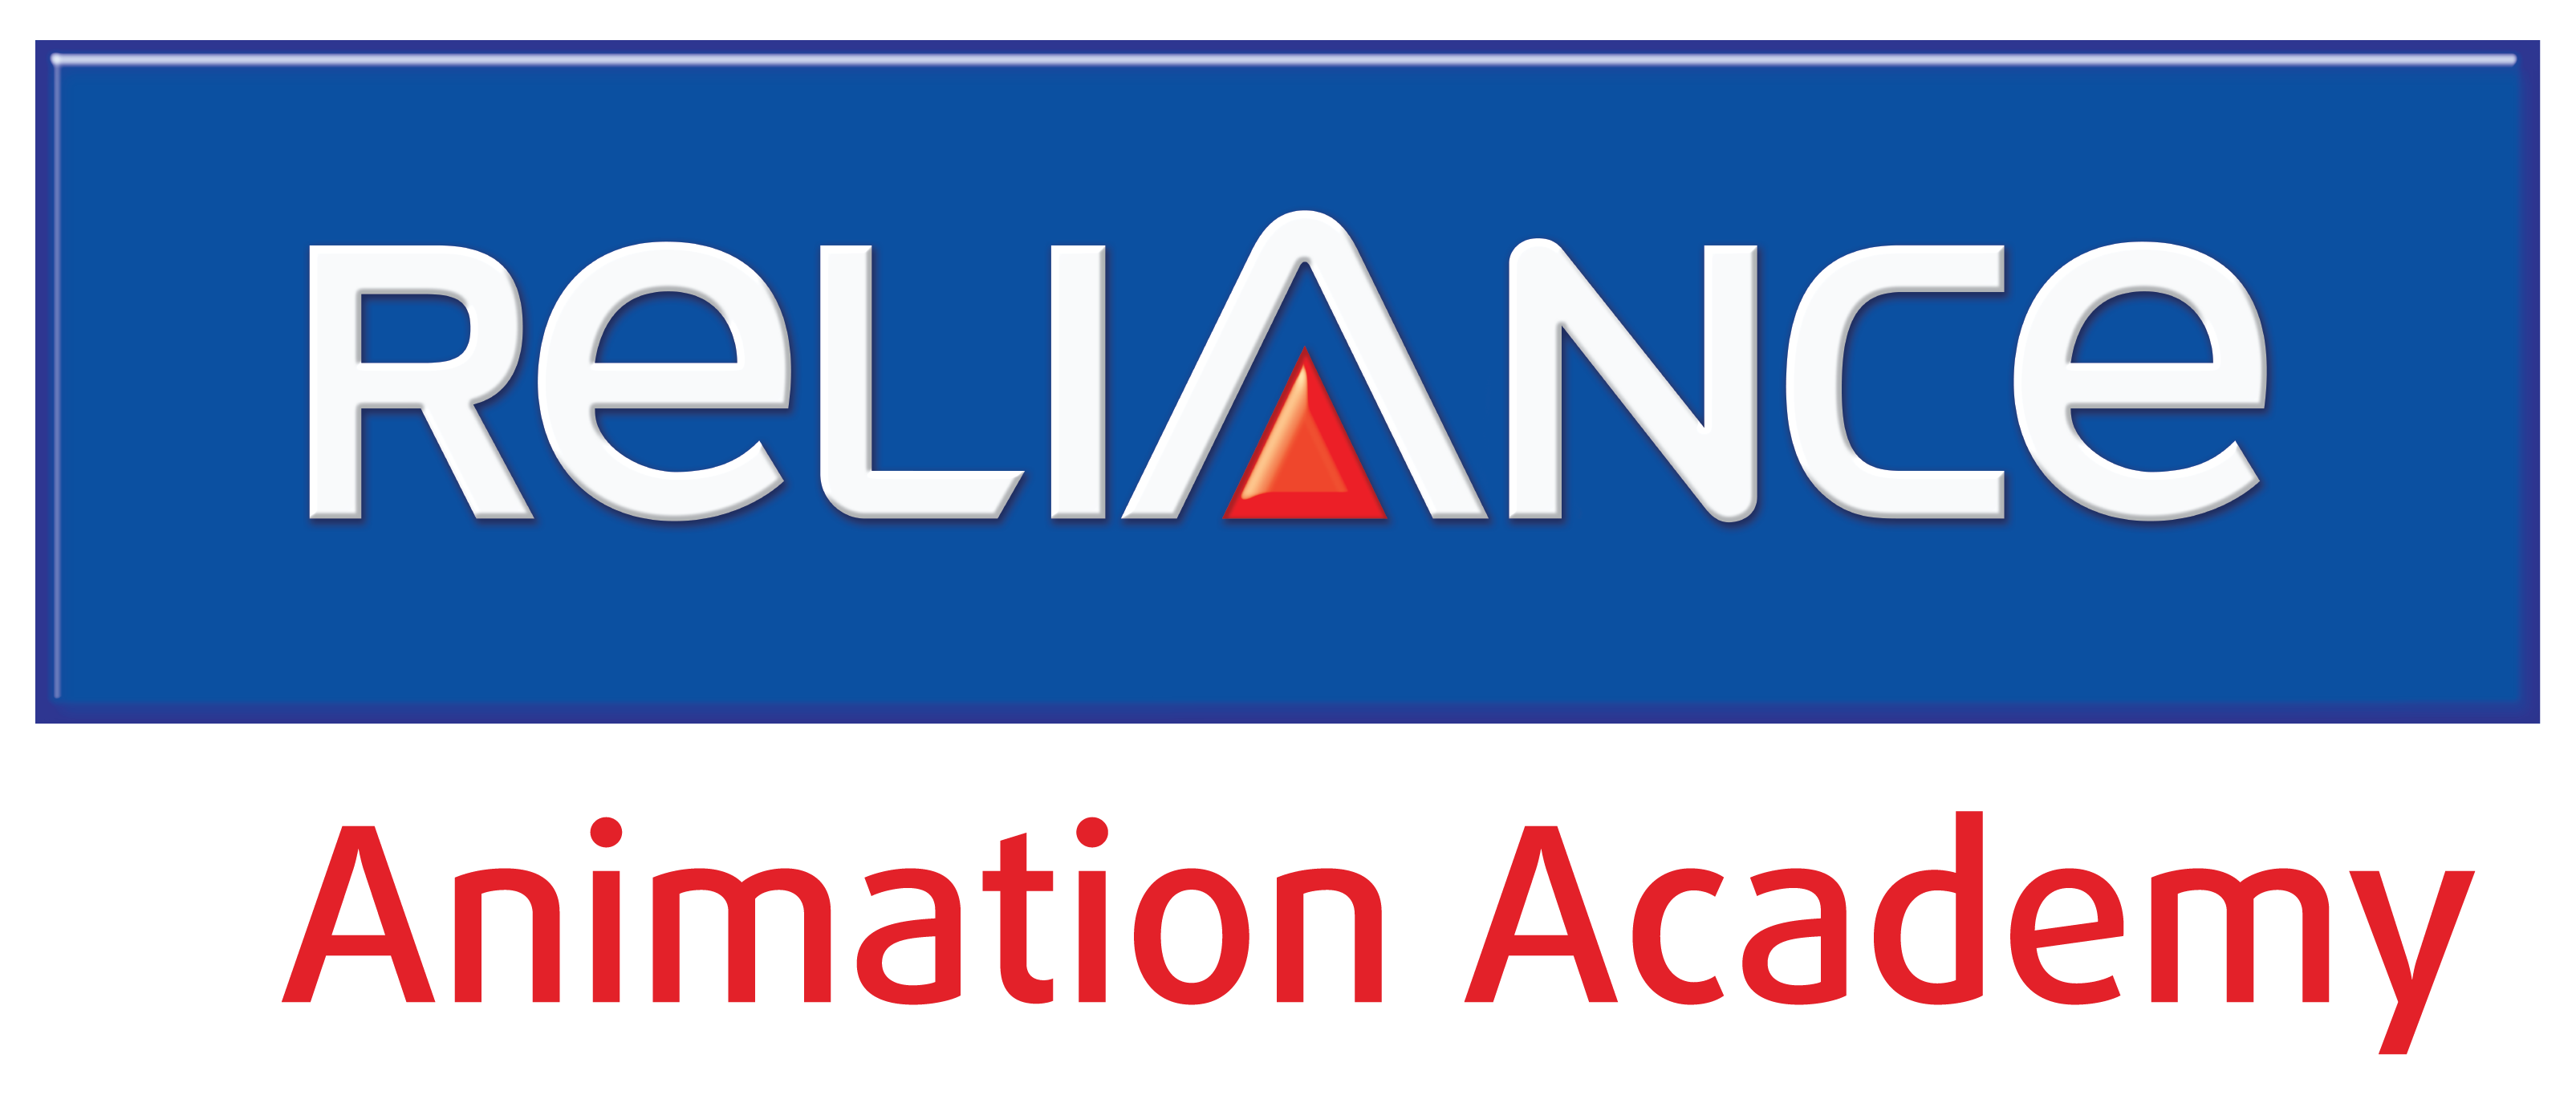 Reliance Animation Academy Logo